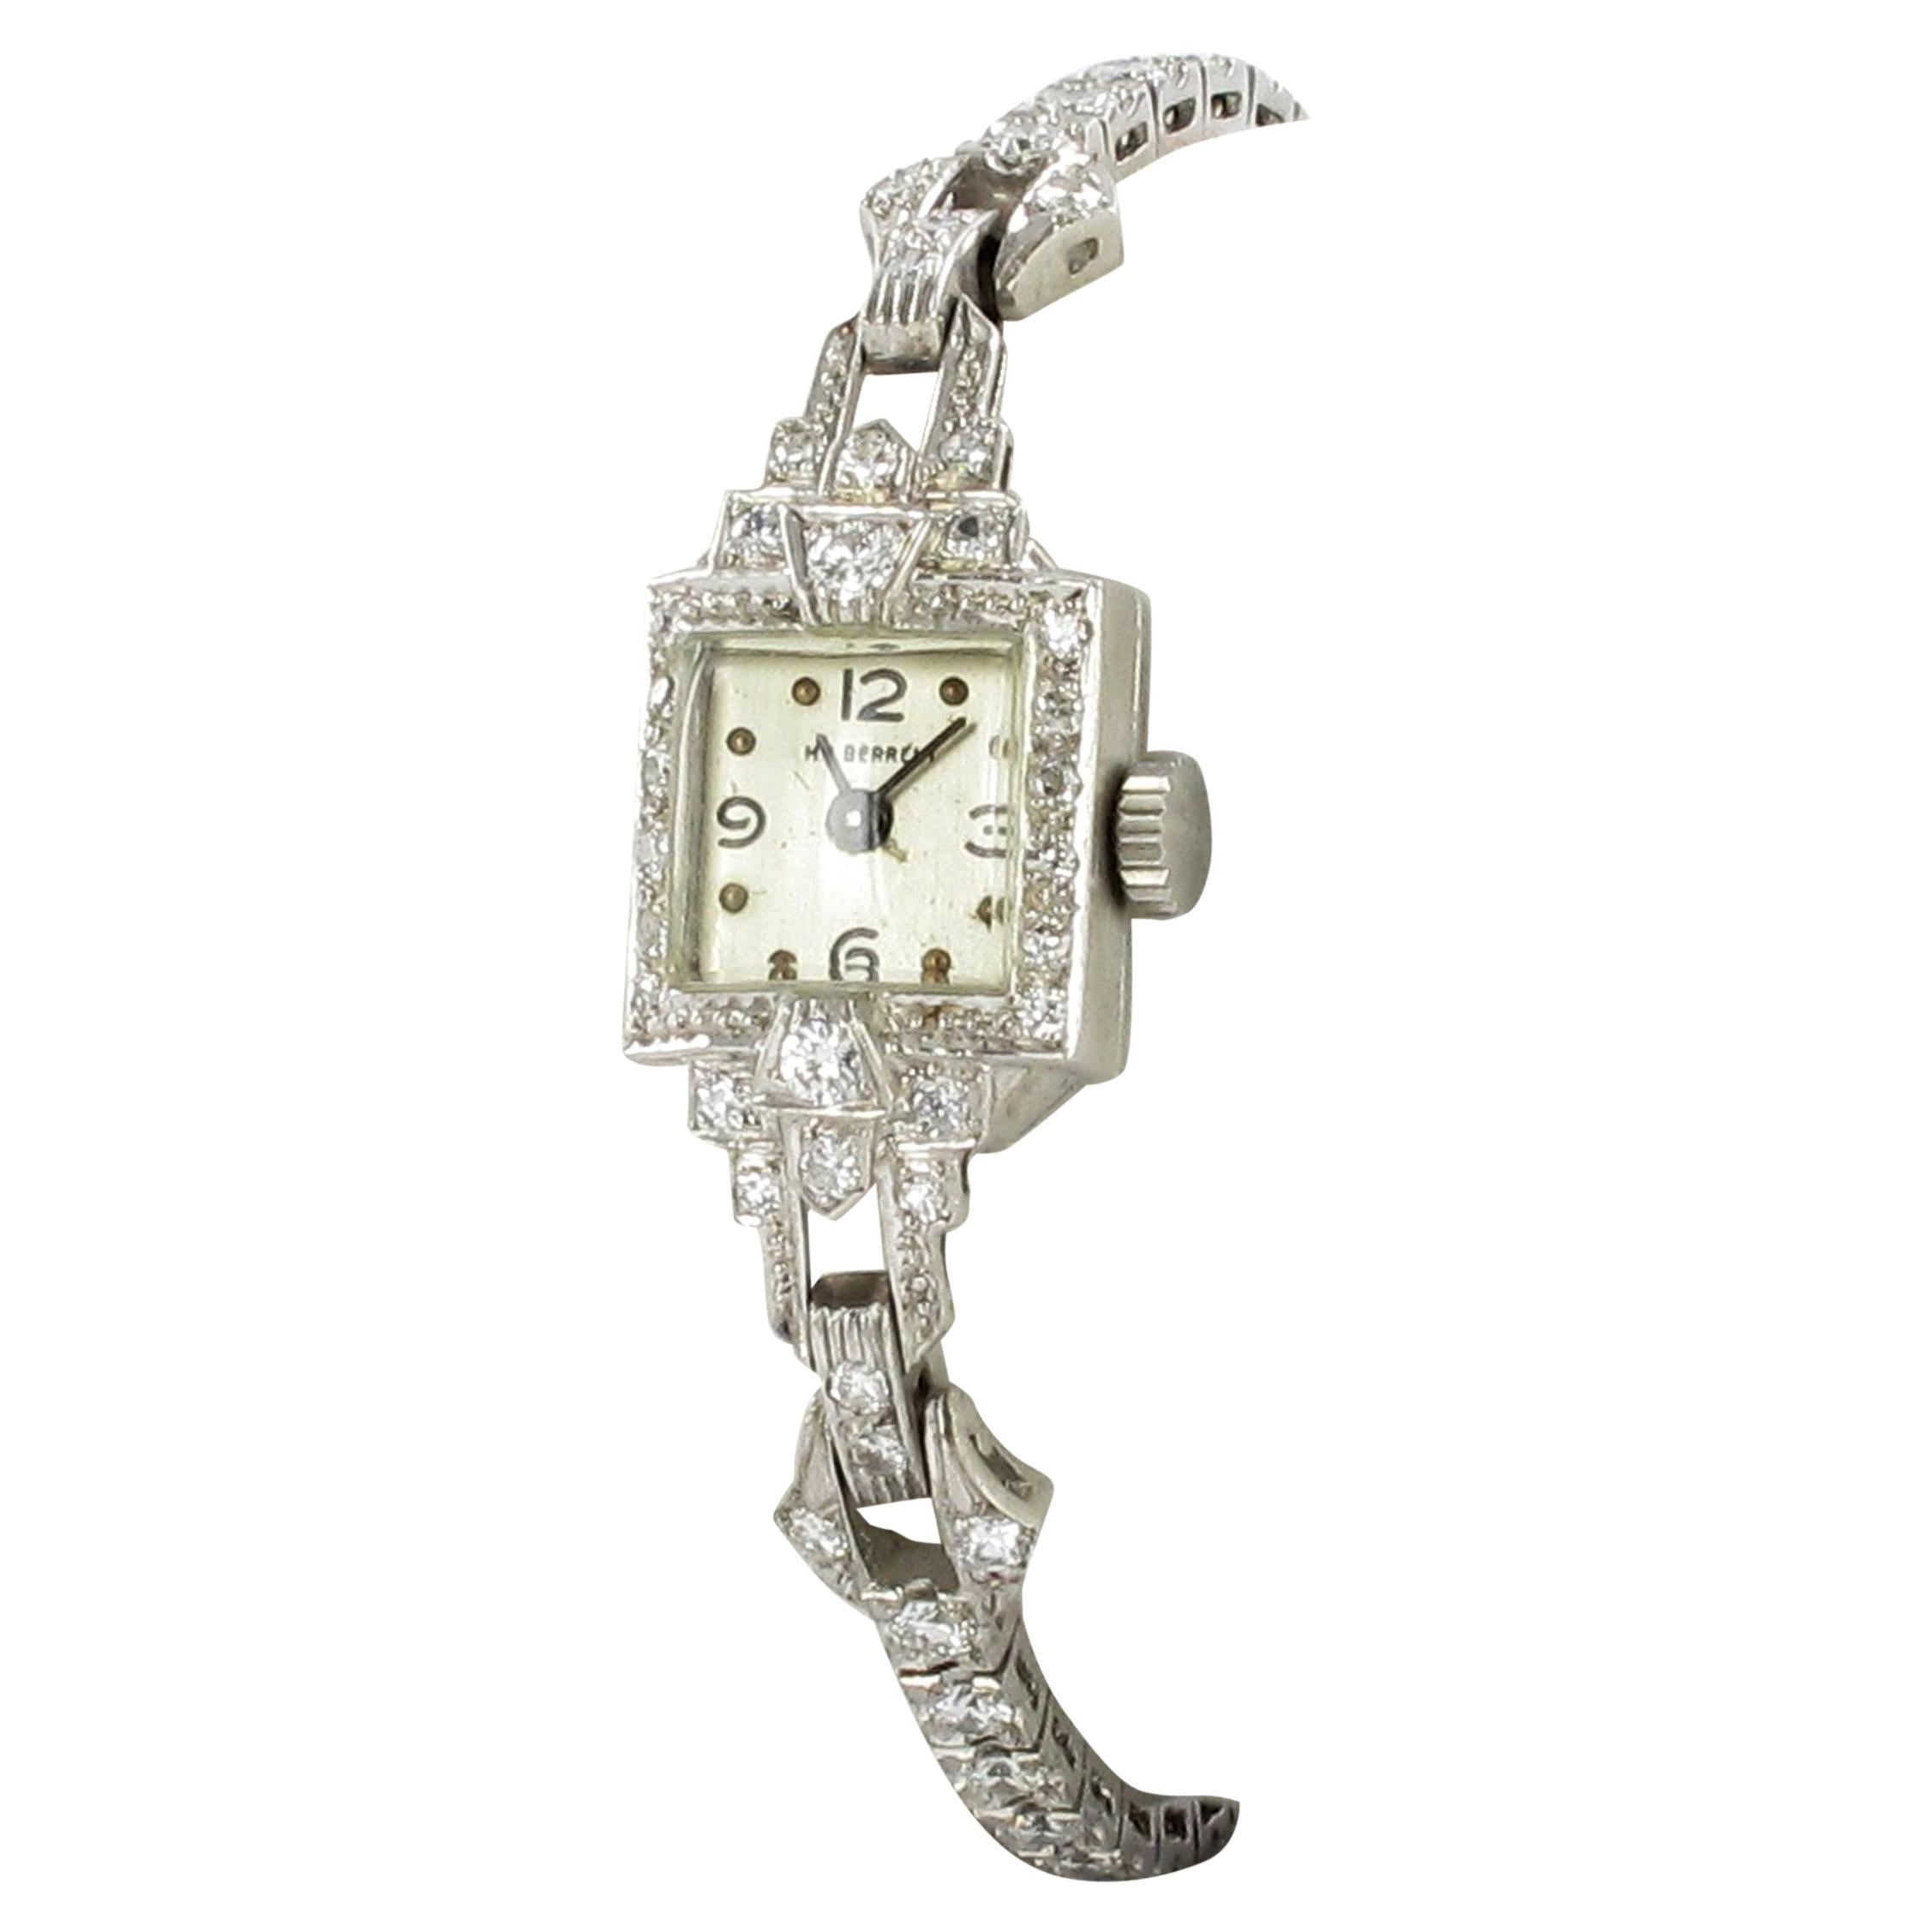 Beautiful Art Deco Style Ladies Bracelet Watch with Diamonds in Platinum 950